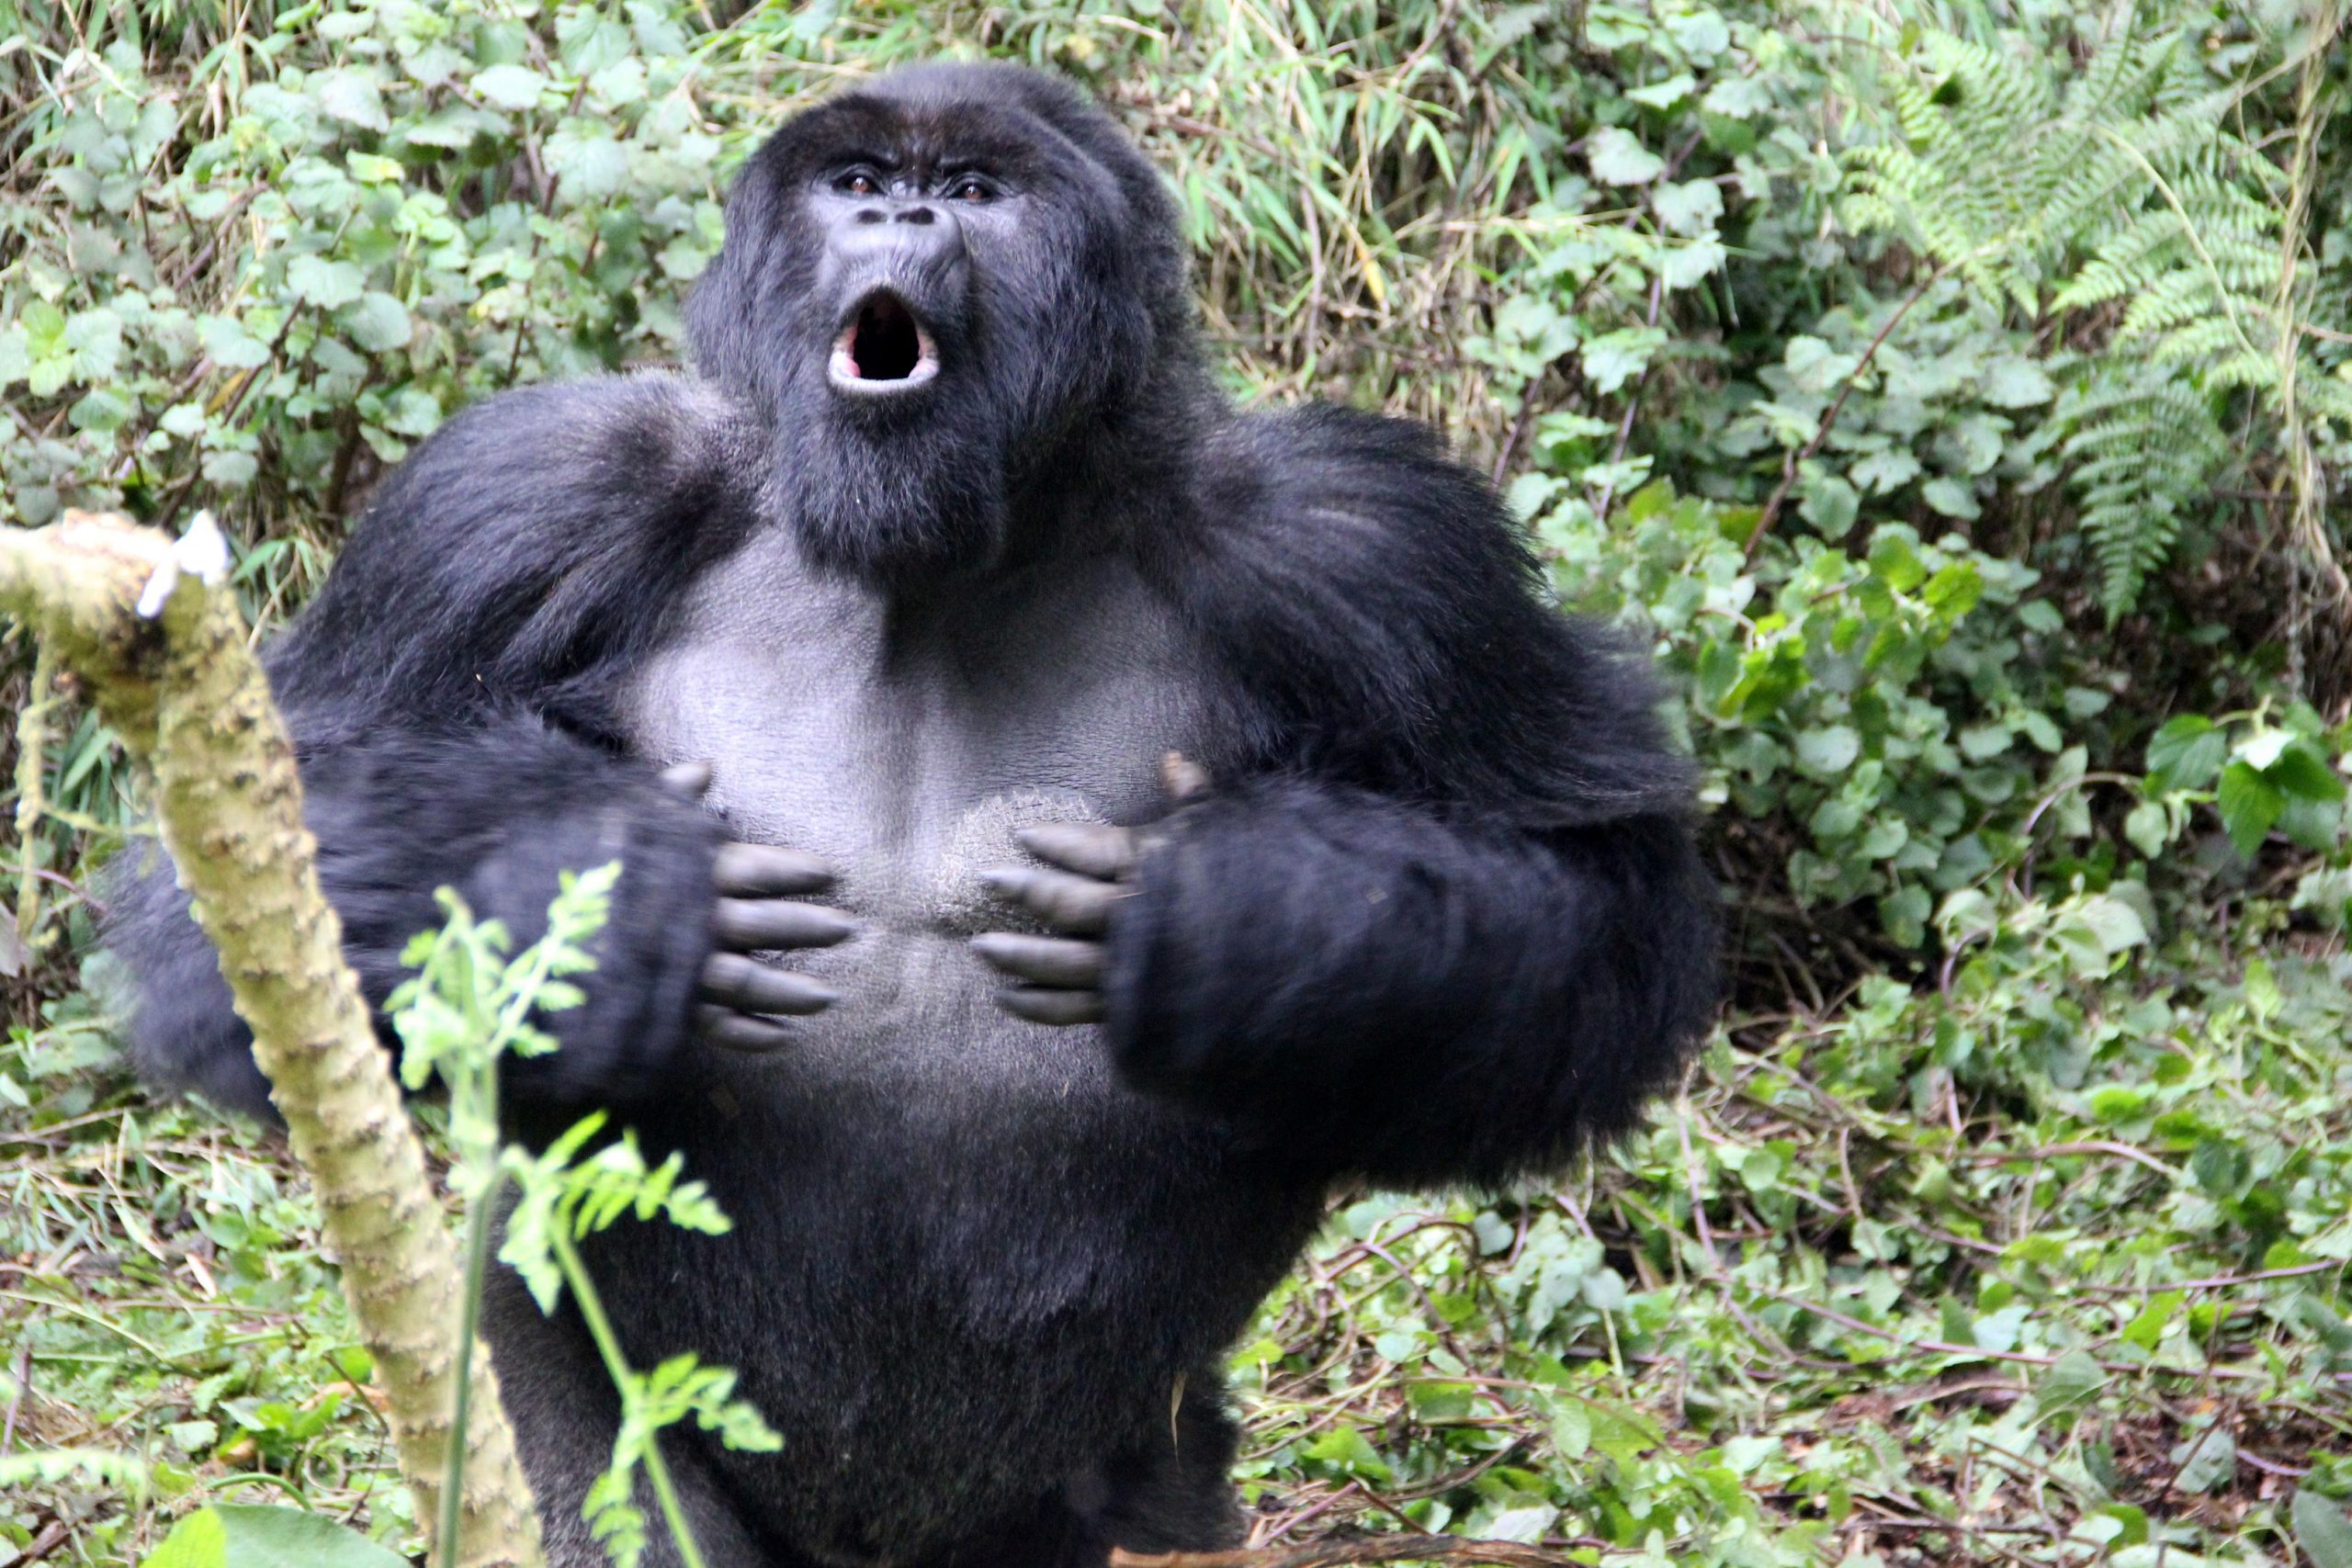 Chest-Beating Gorillas Don’t Bluff: Honest Signal of True Body Size.